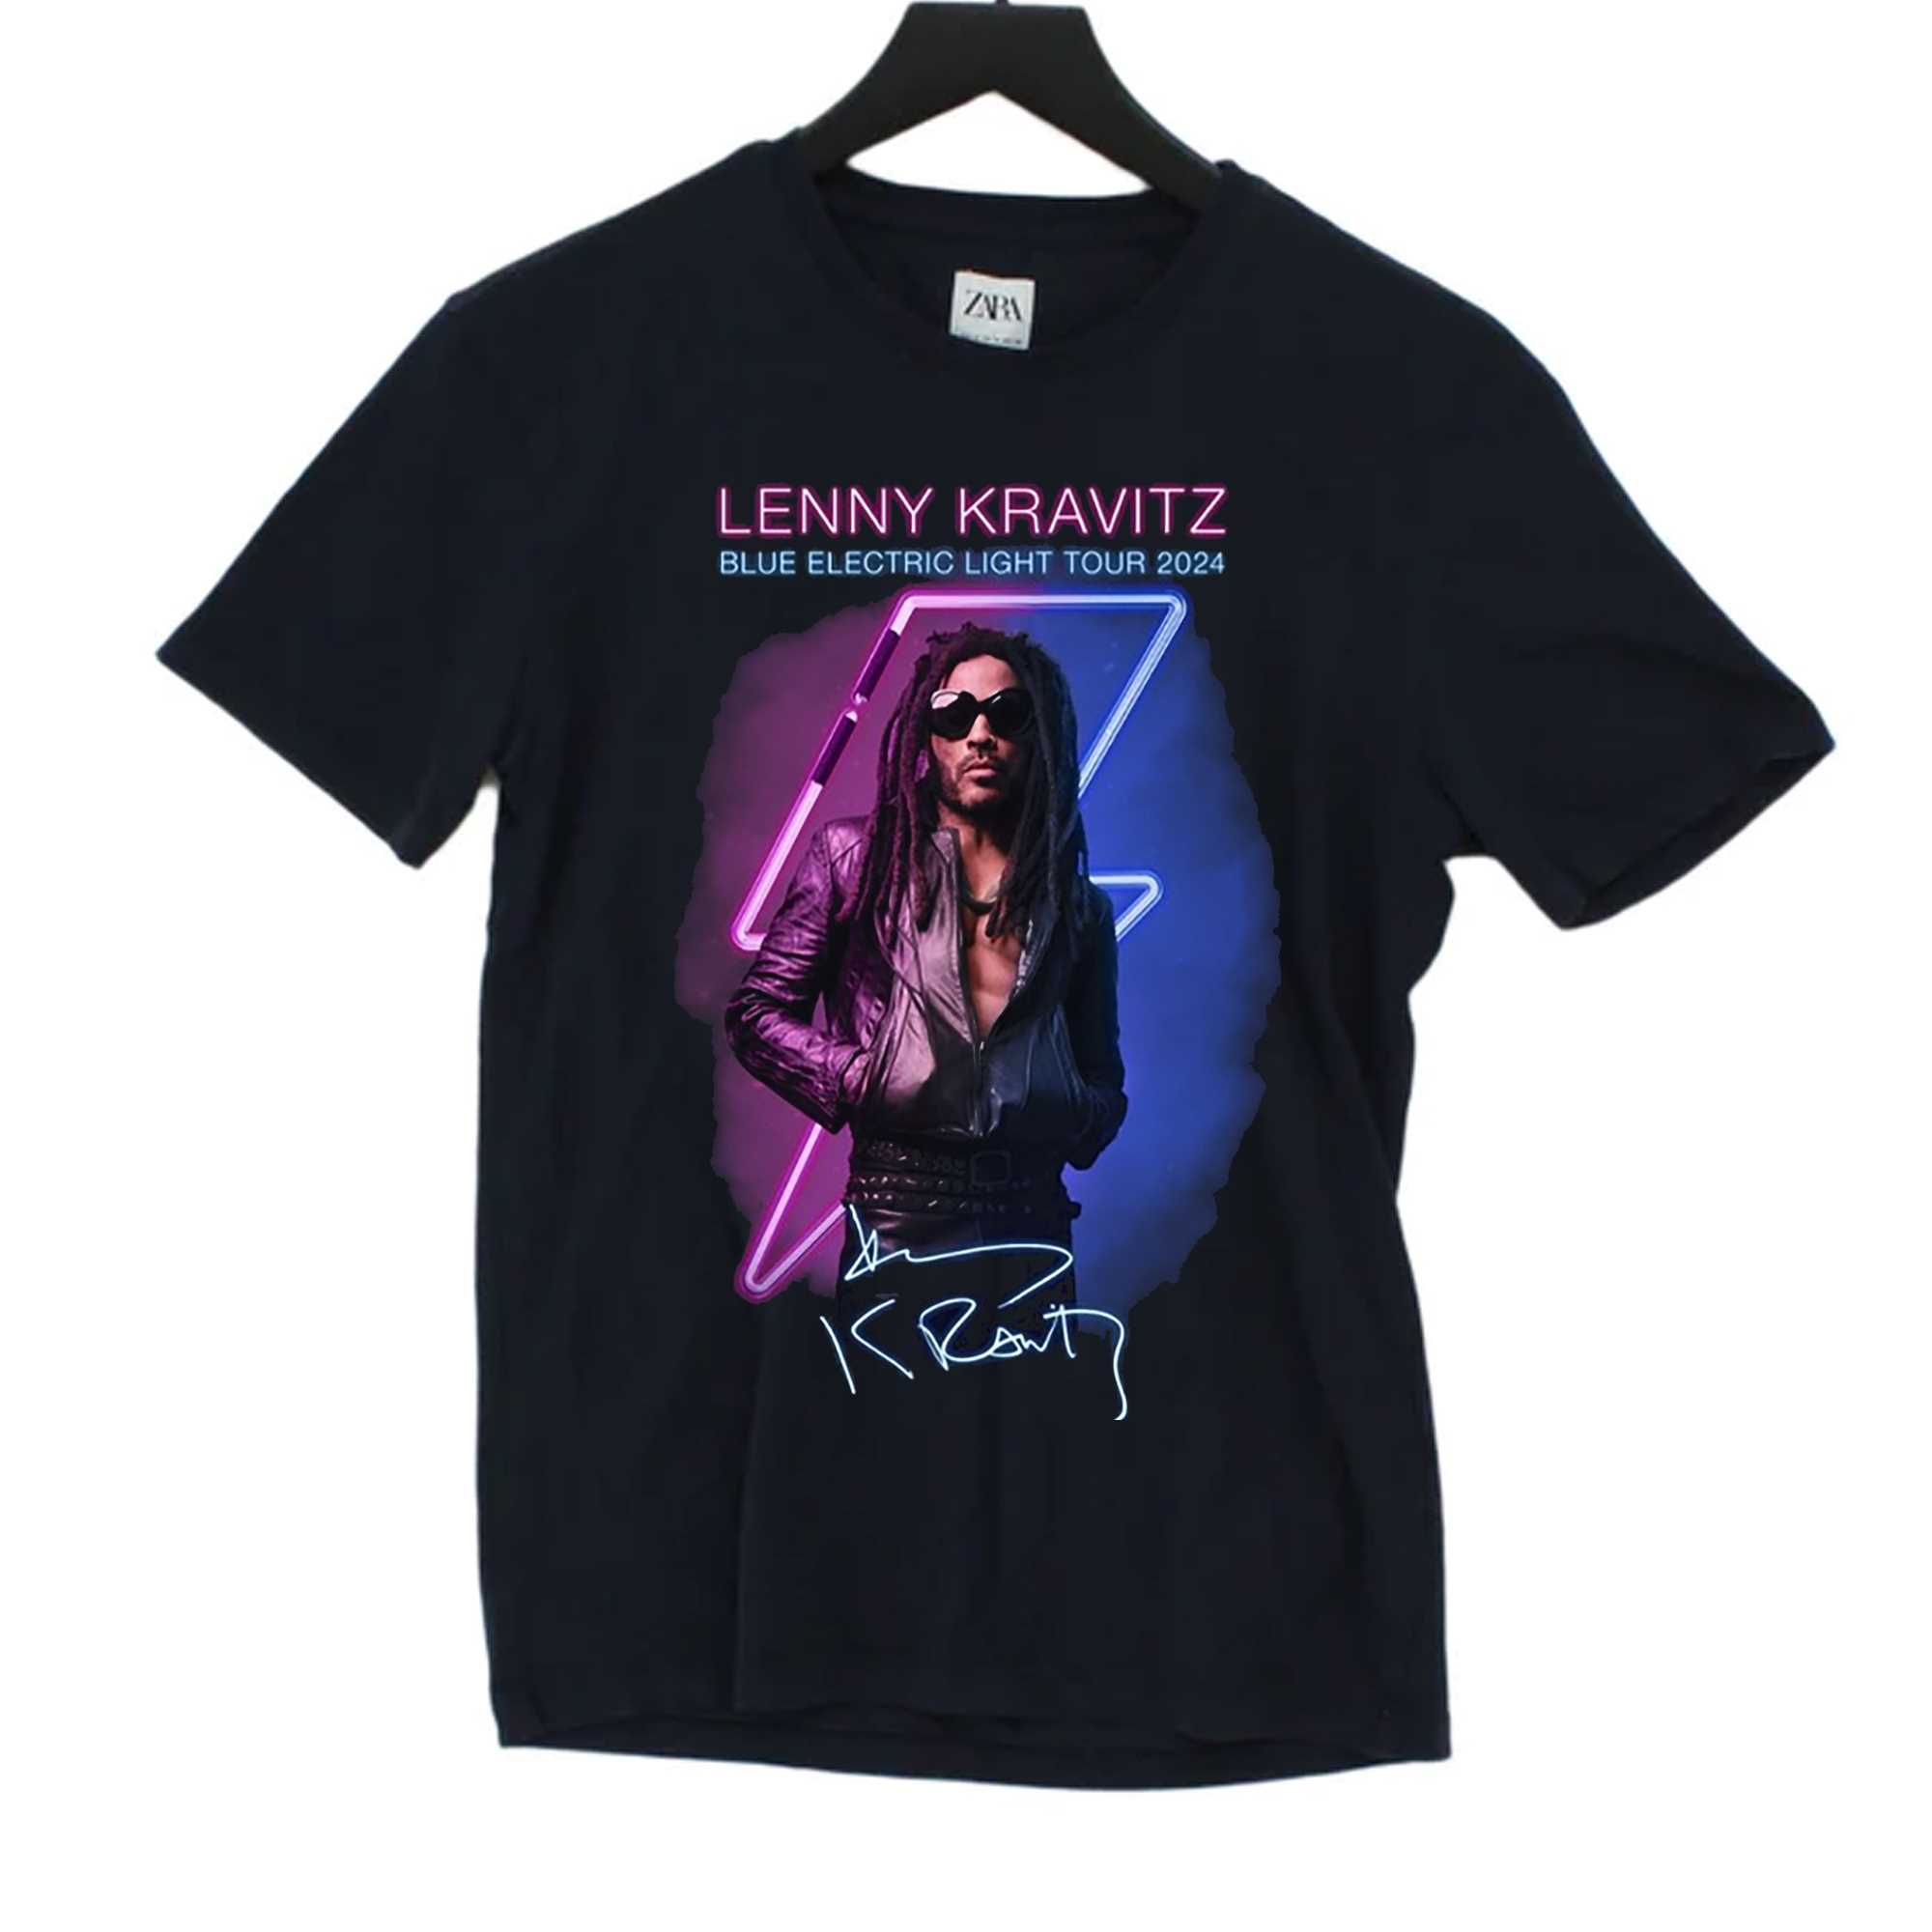 Lenny Kravitz Blue Electric Light Tour 2024 Tshirt Shibtee Clothing